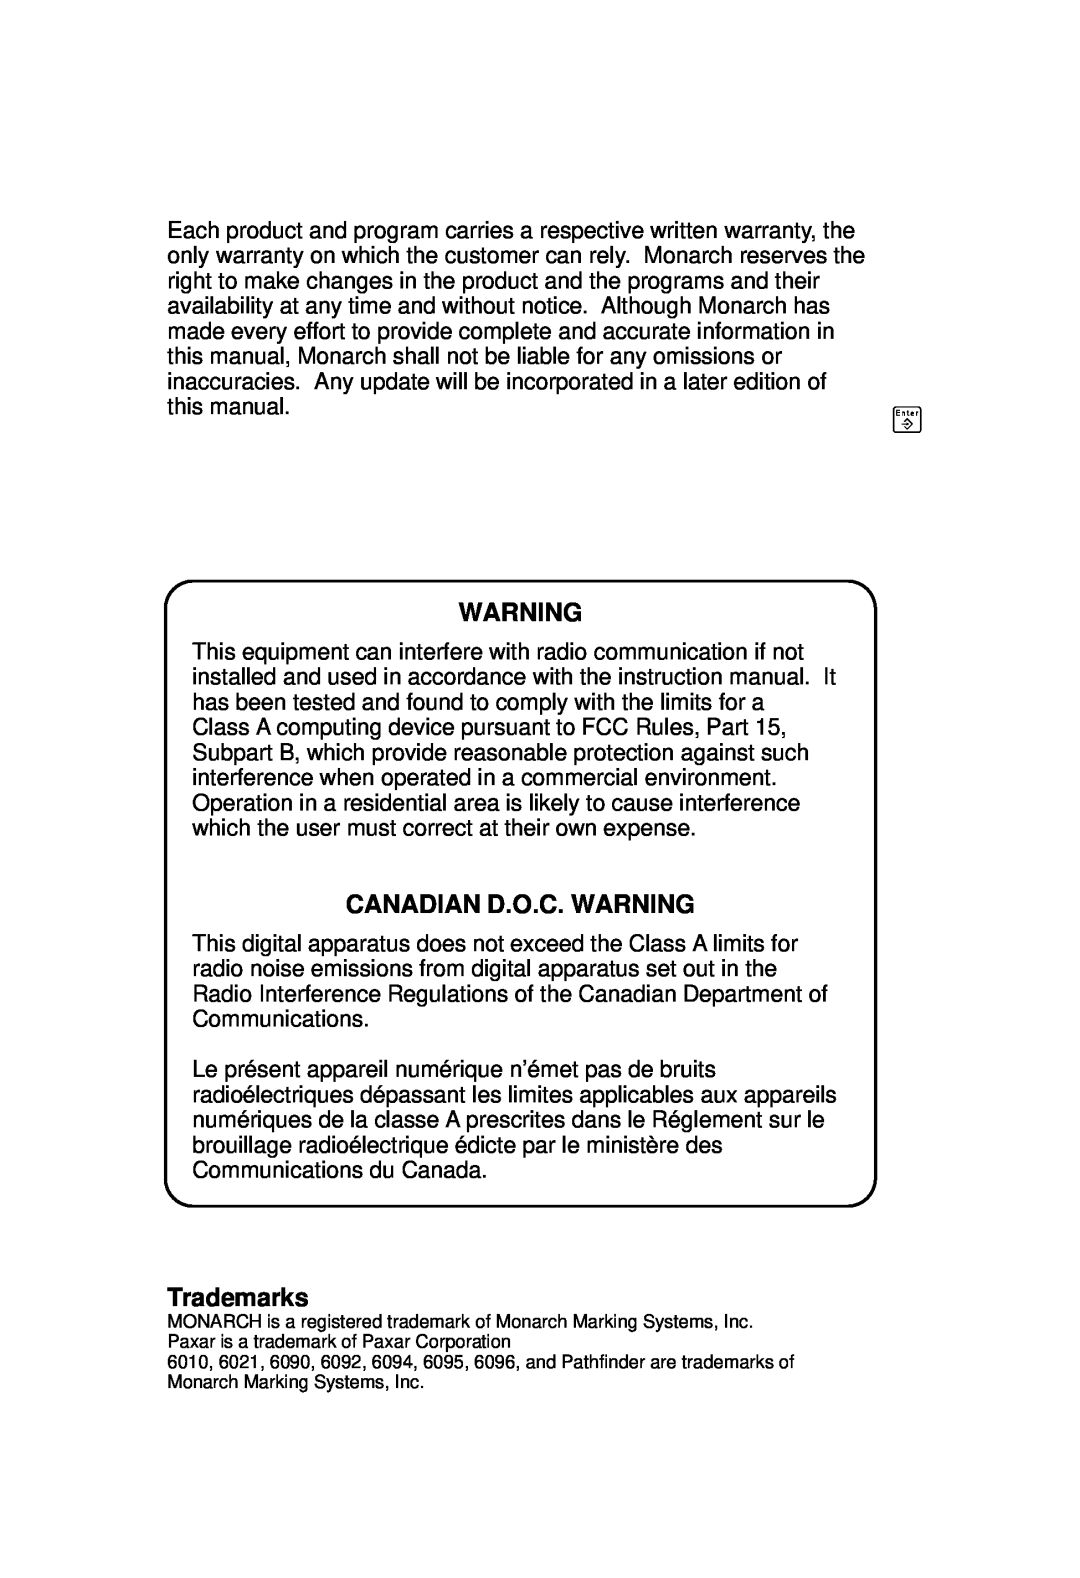 Paxar TC6021OH manual Canadian D.O.C. Warning, Trademarks 